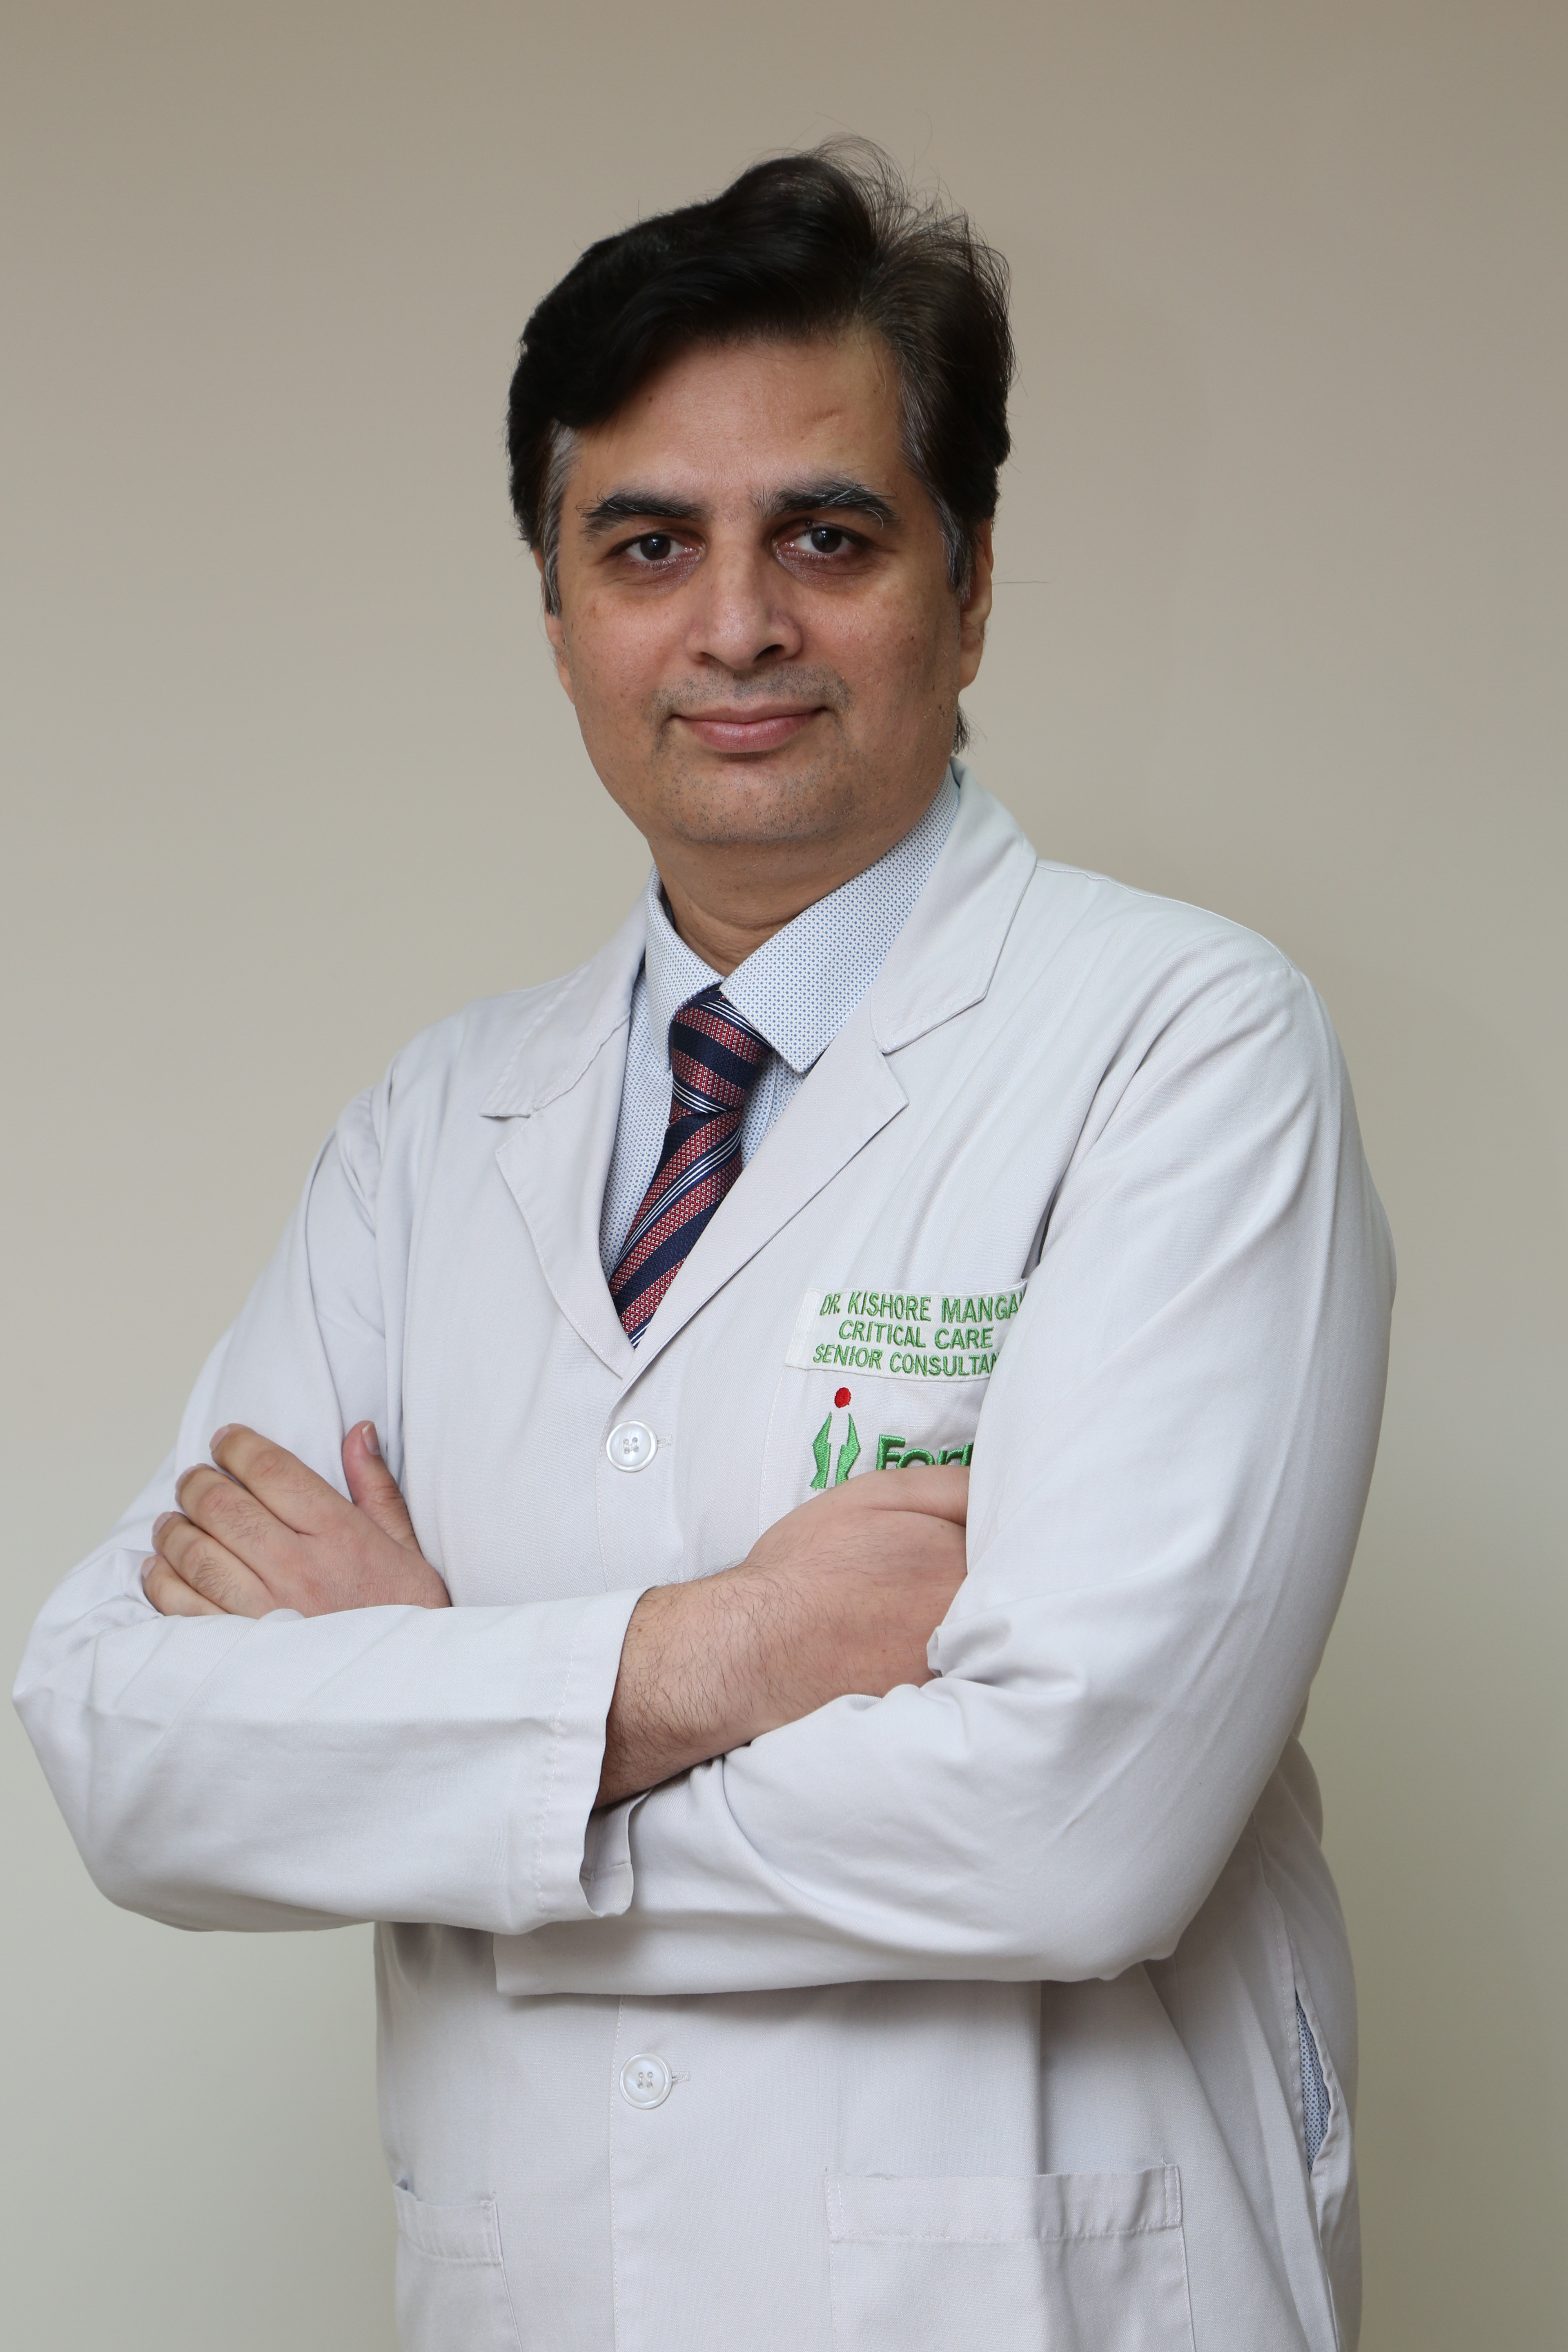 Kishore Mangal博士